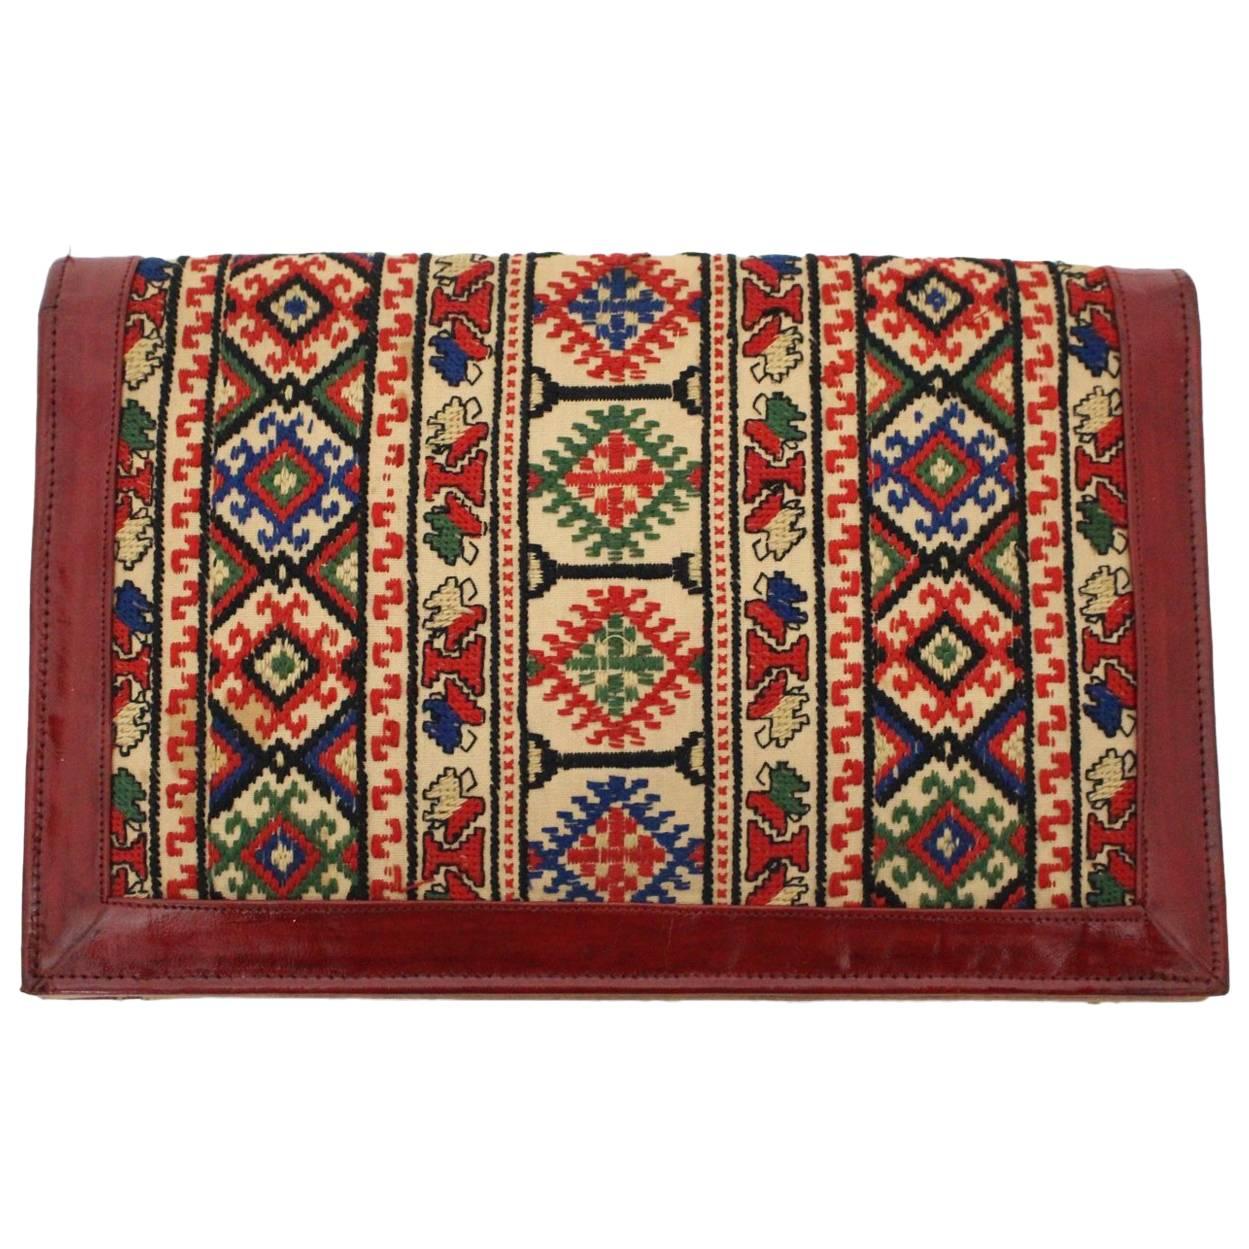 Multicolored Handbag Clutch 1930s Eastern Europe For Sale